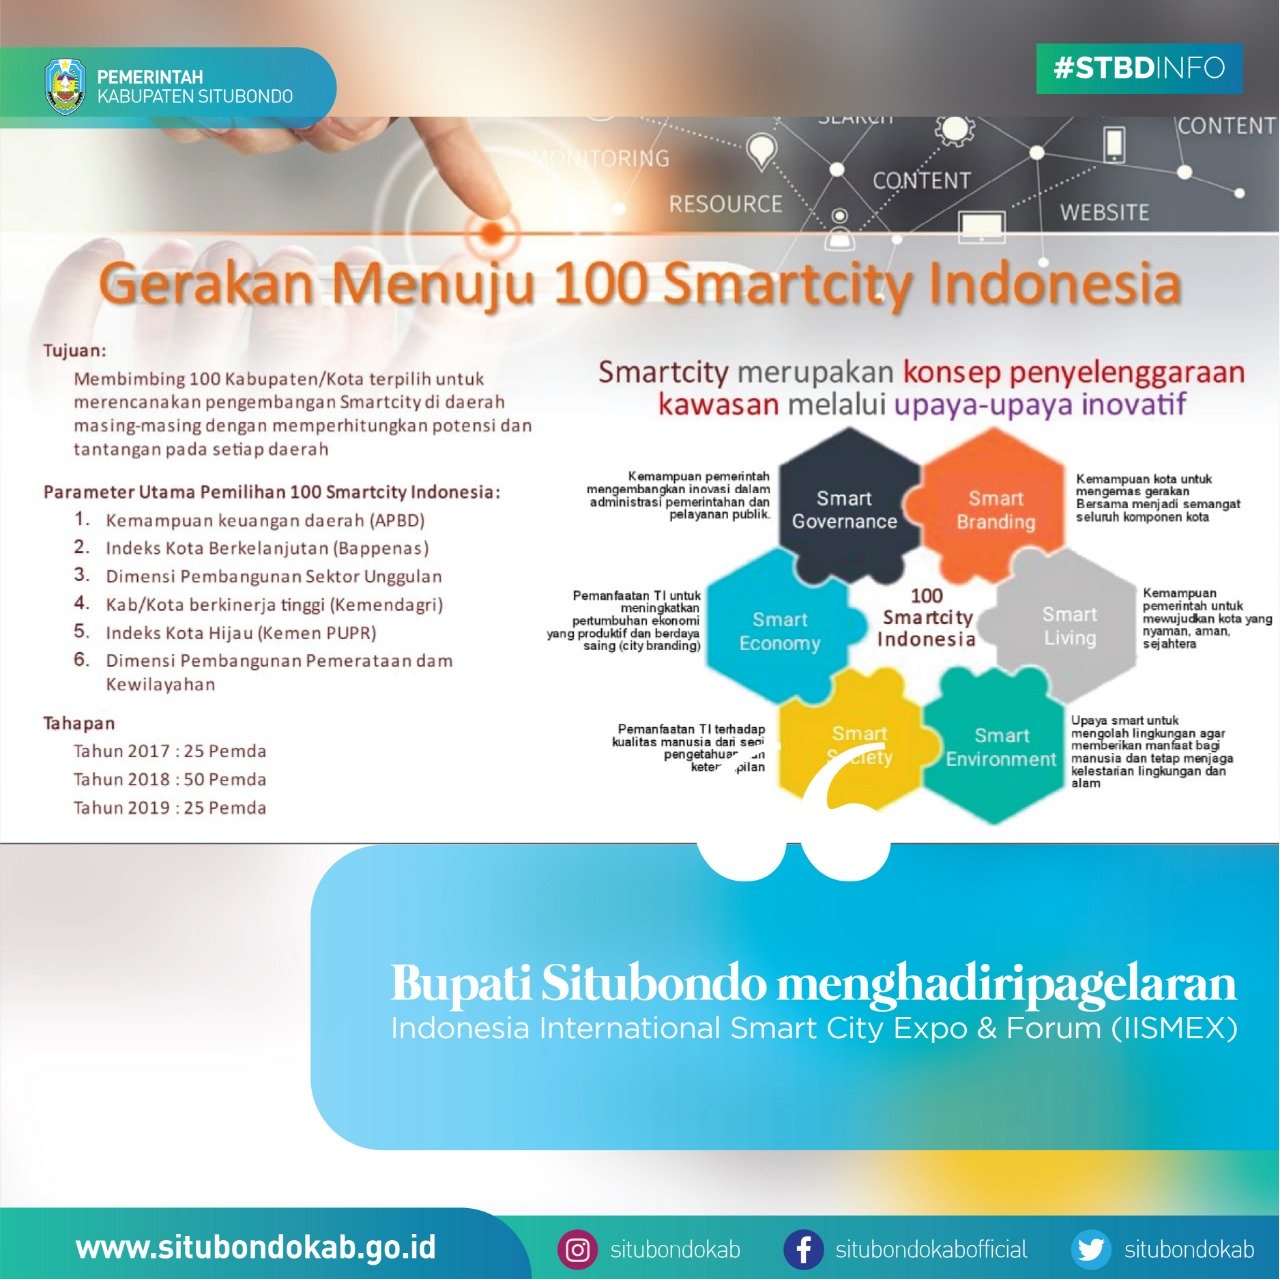 BUPATI SITUBONDO HADIRI PAGELARAN INDONESIA INTERNATIONAL SMART CITY EXPO & FORUM (IISMEX)